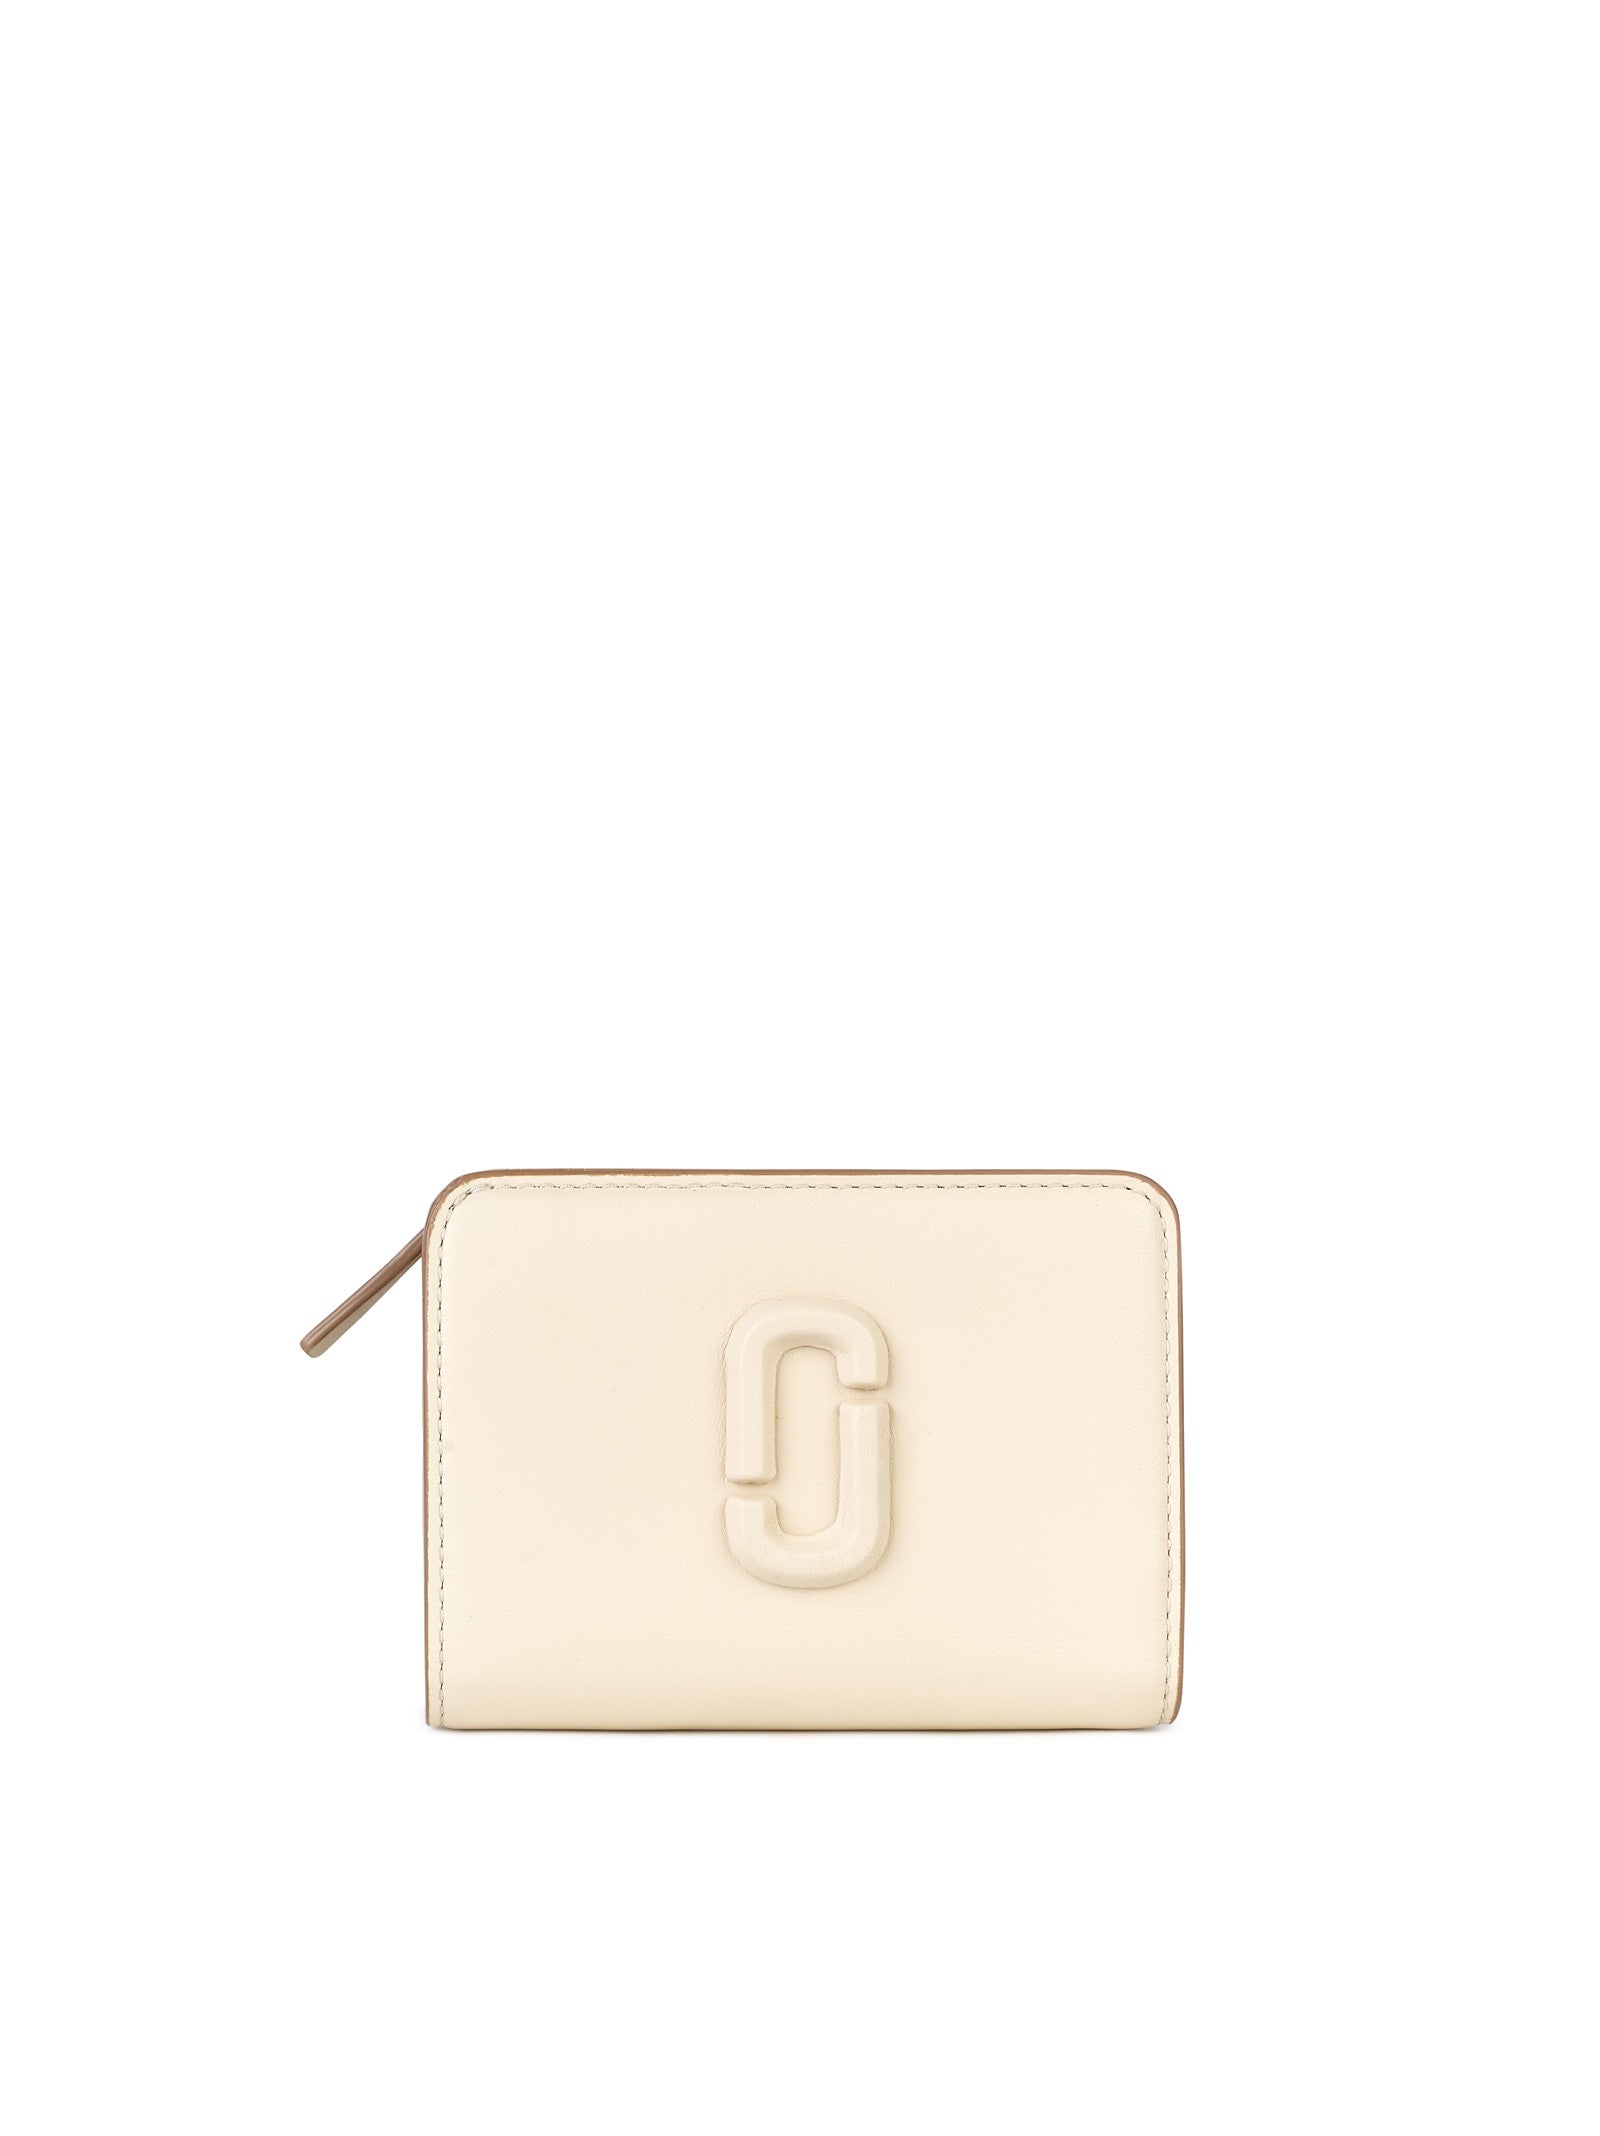 Portafogli MARC JACOBS Mini compact wallet
Cloud white